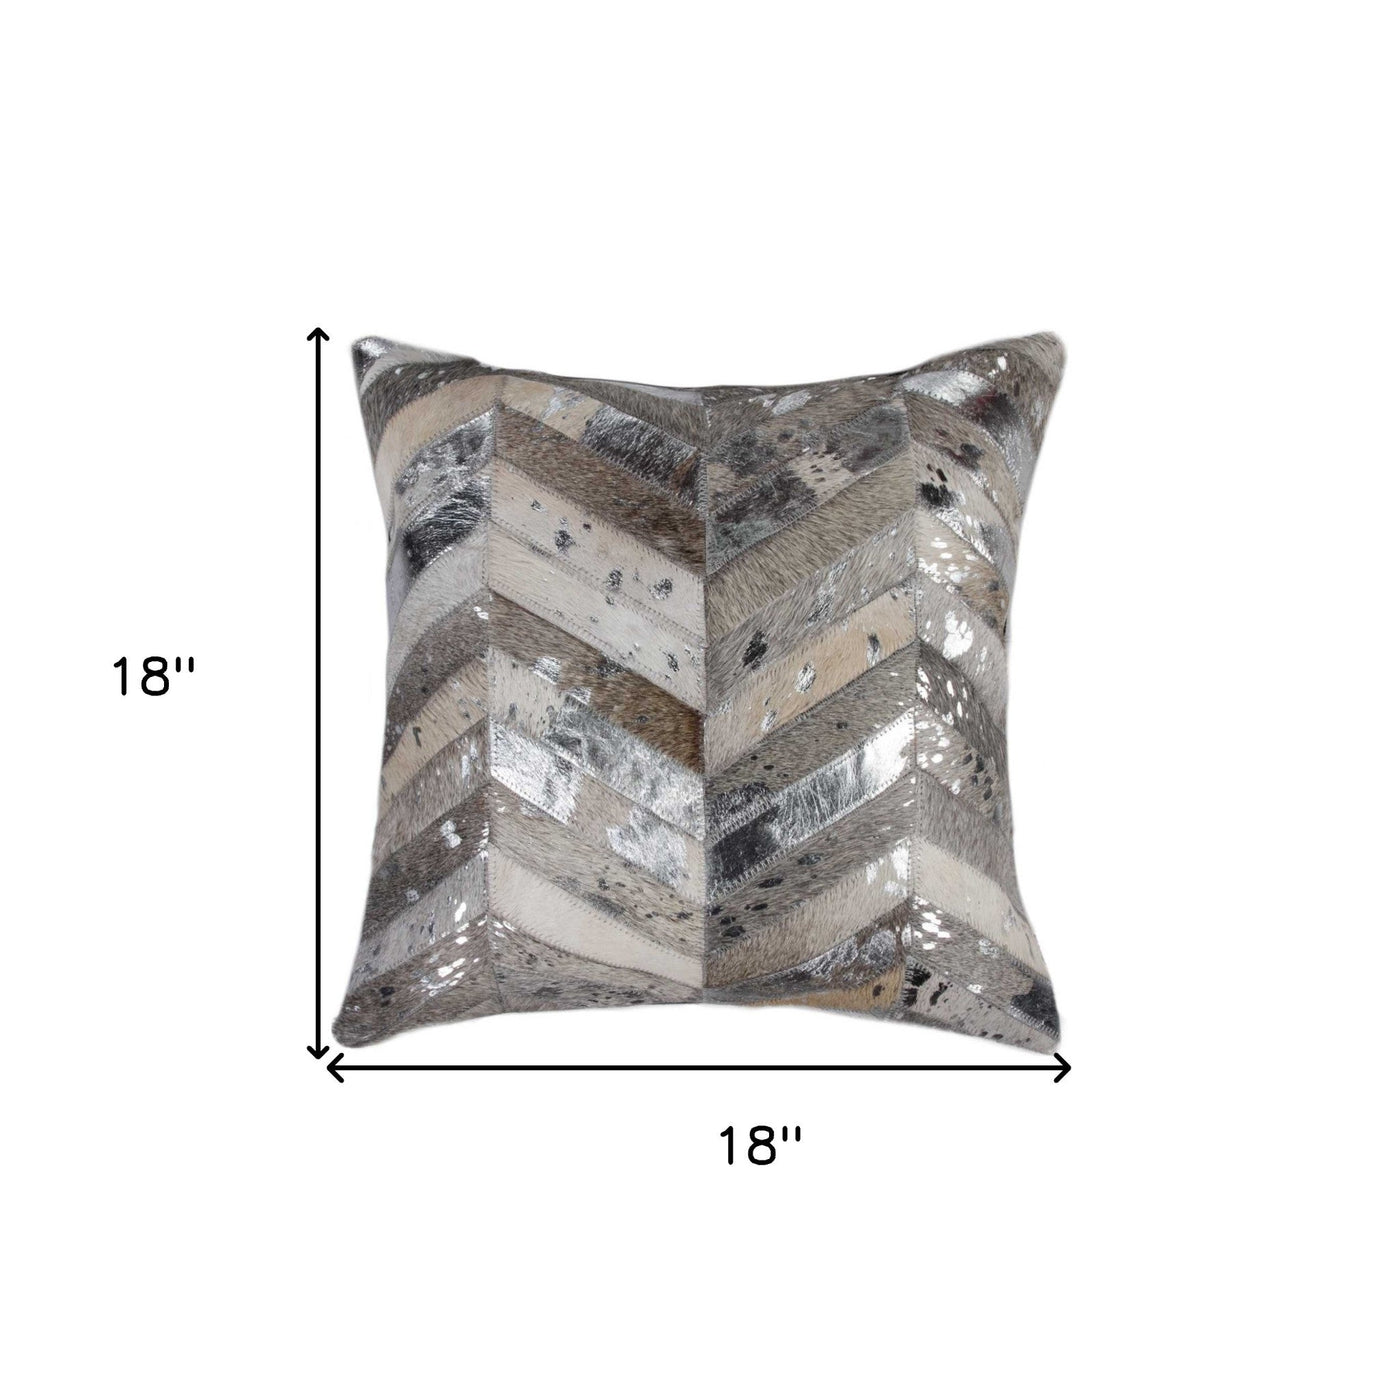 18’ Silver Cowhide Throw Pillow - Accent Throw Pillows